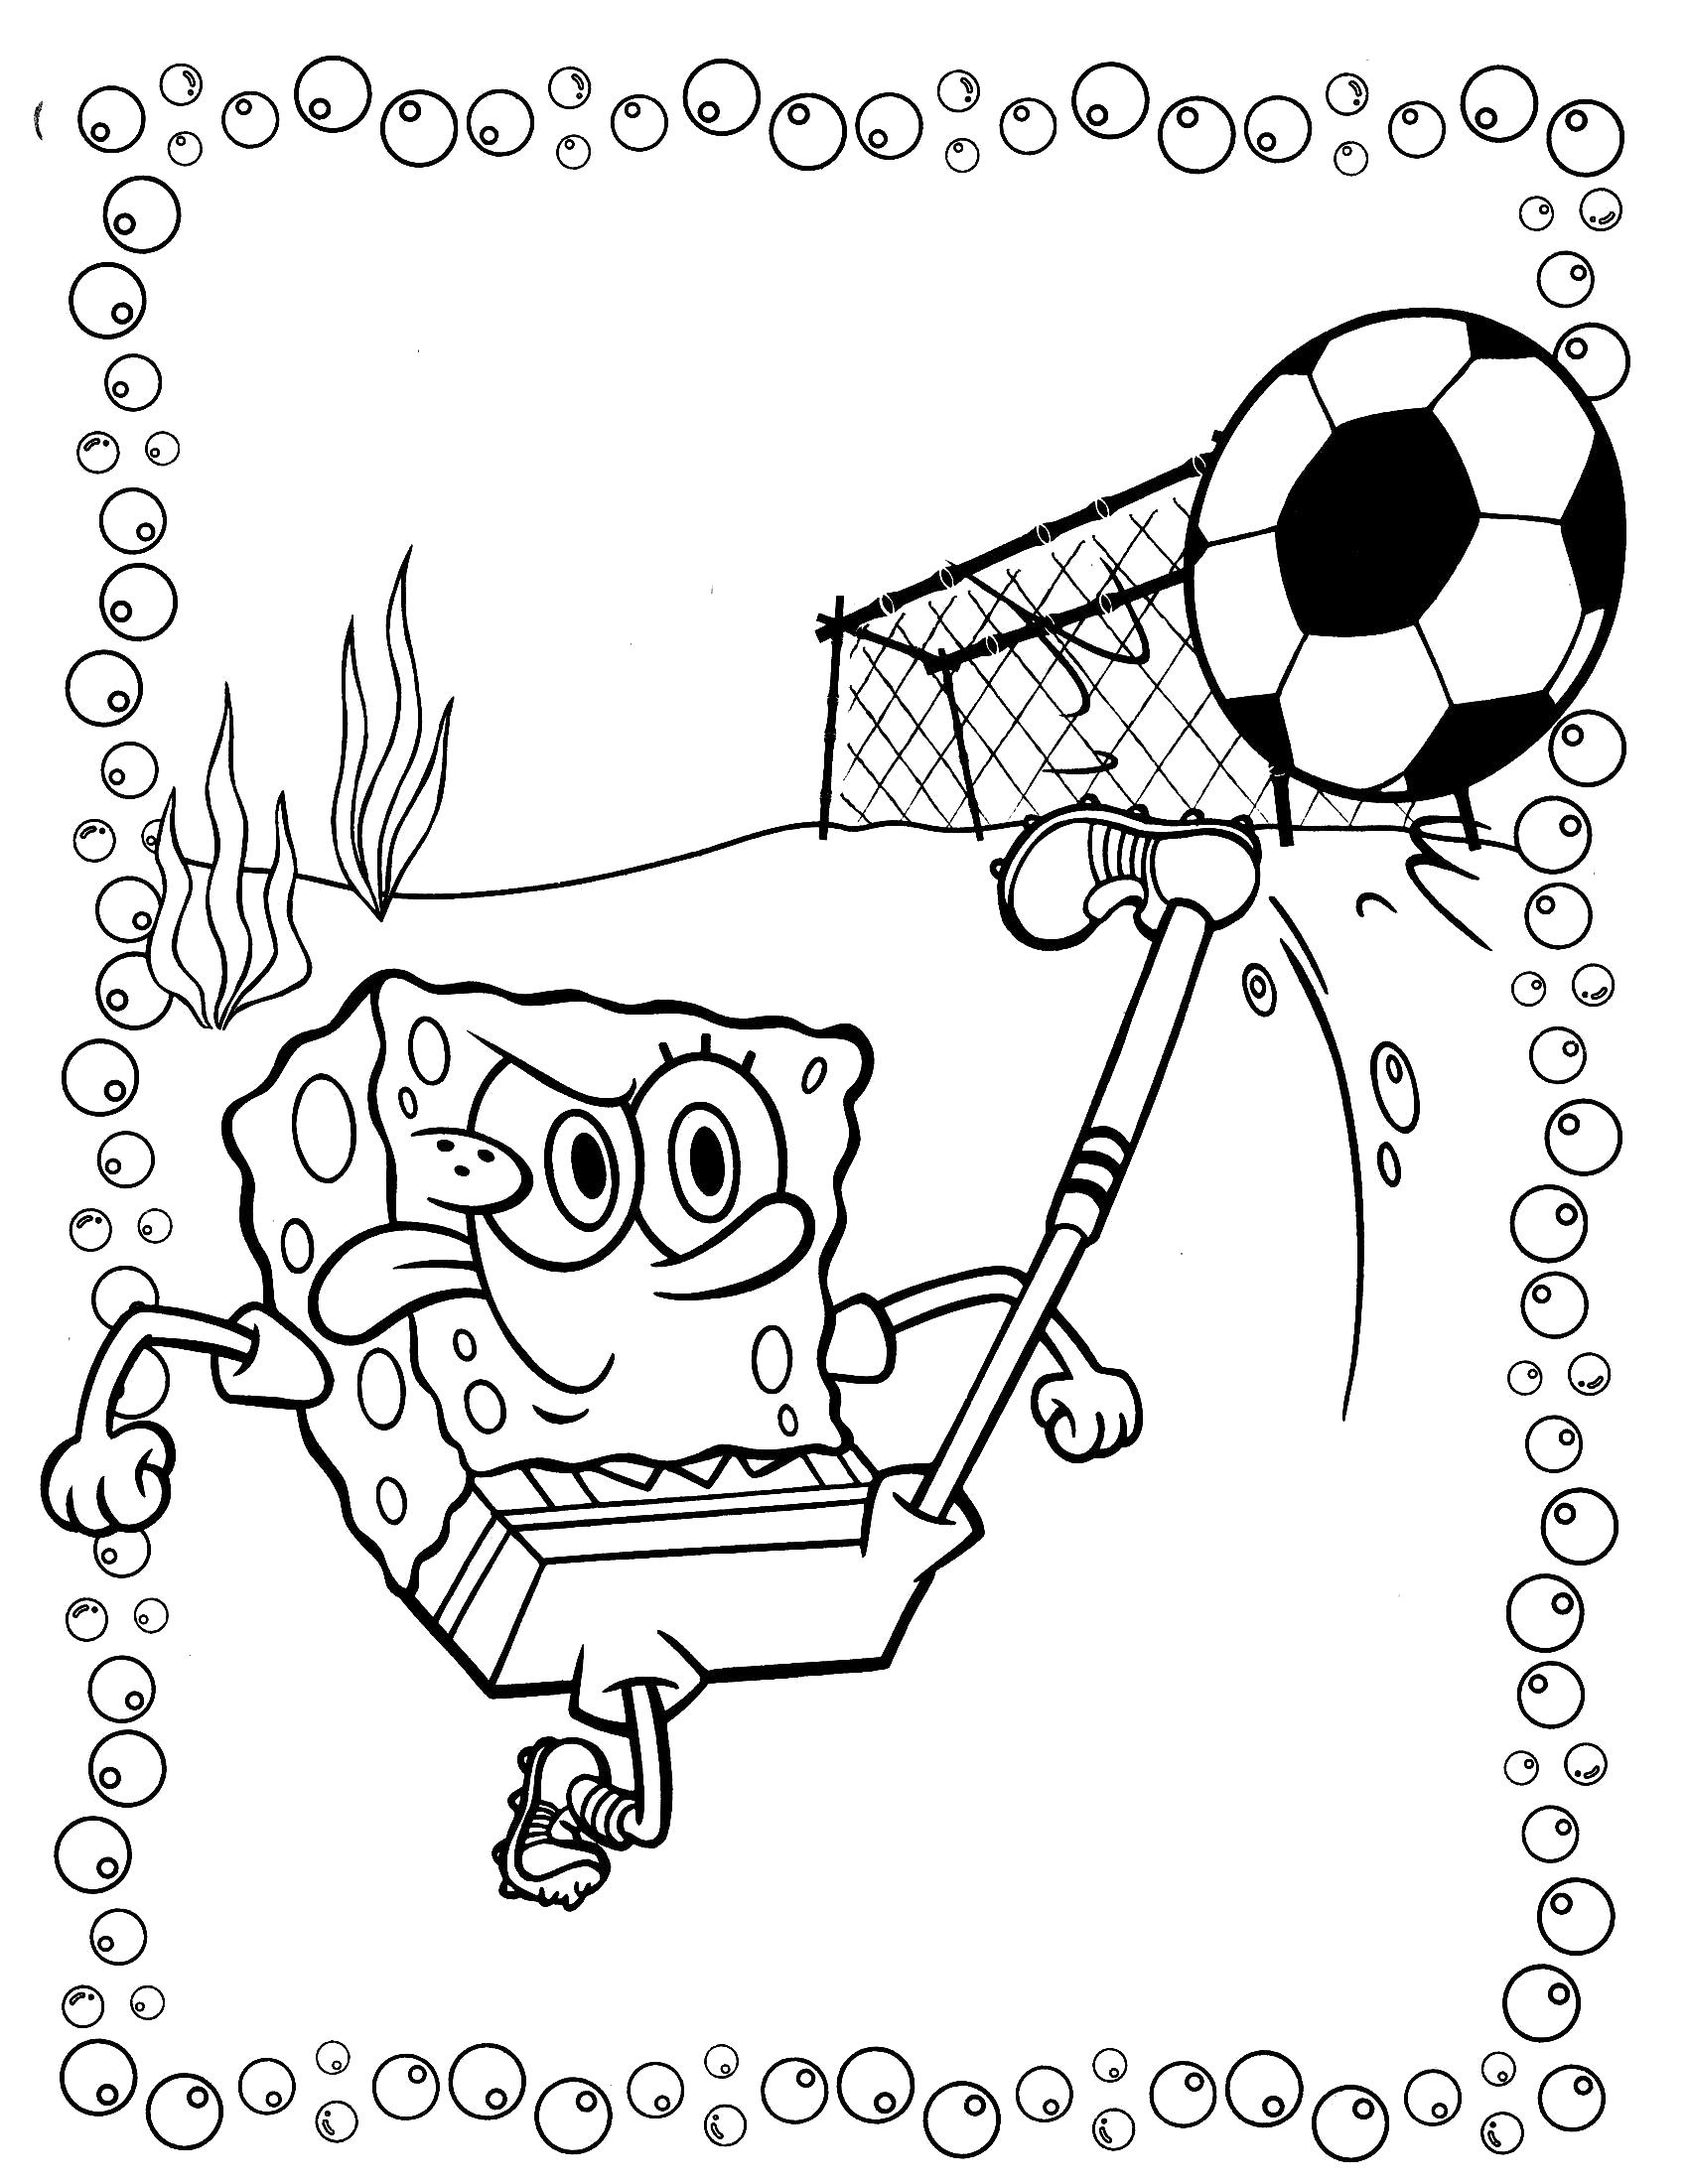 Название: Раскраска Спанч Боб играет в футбол. Категория: Спанч боб. Теги: Спанч боб.